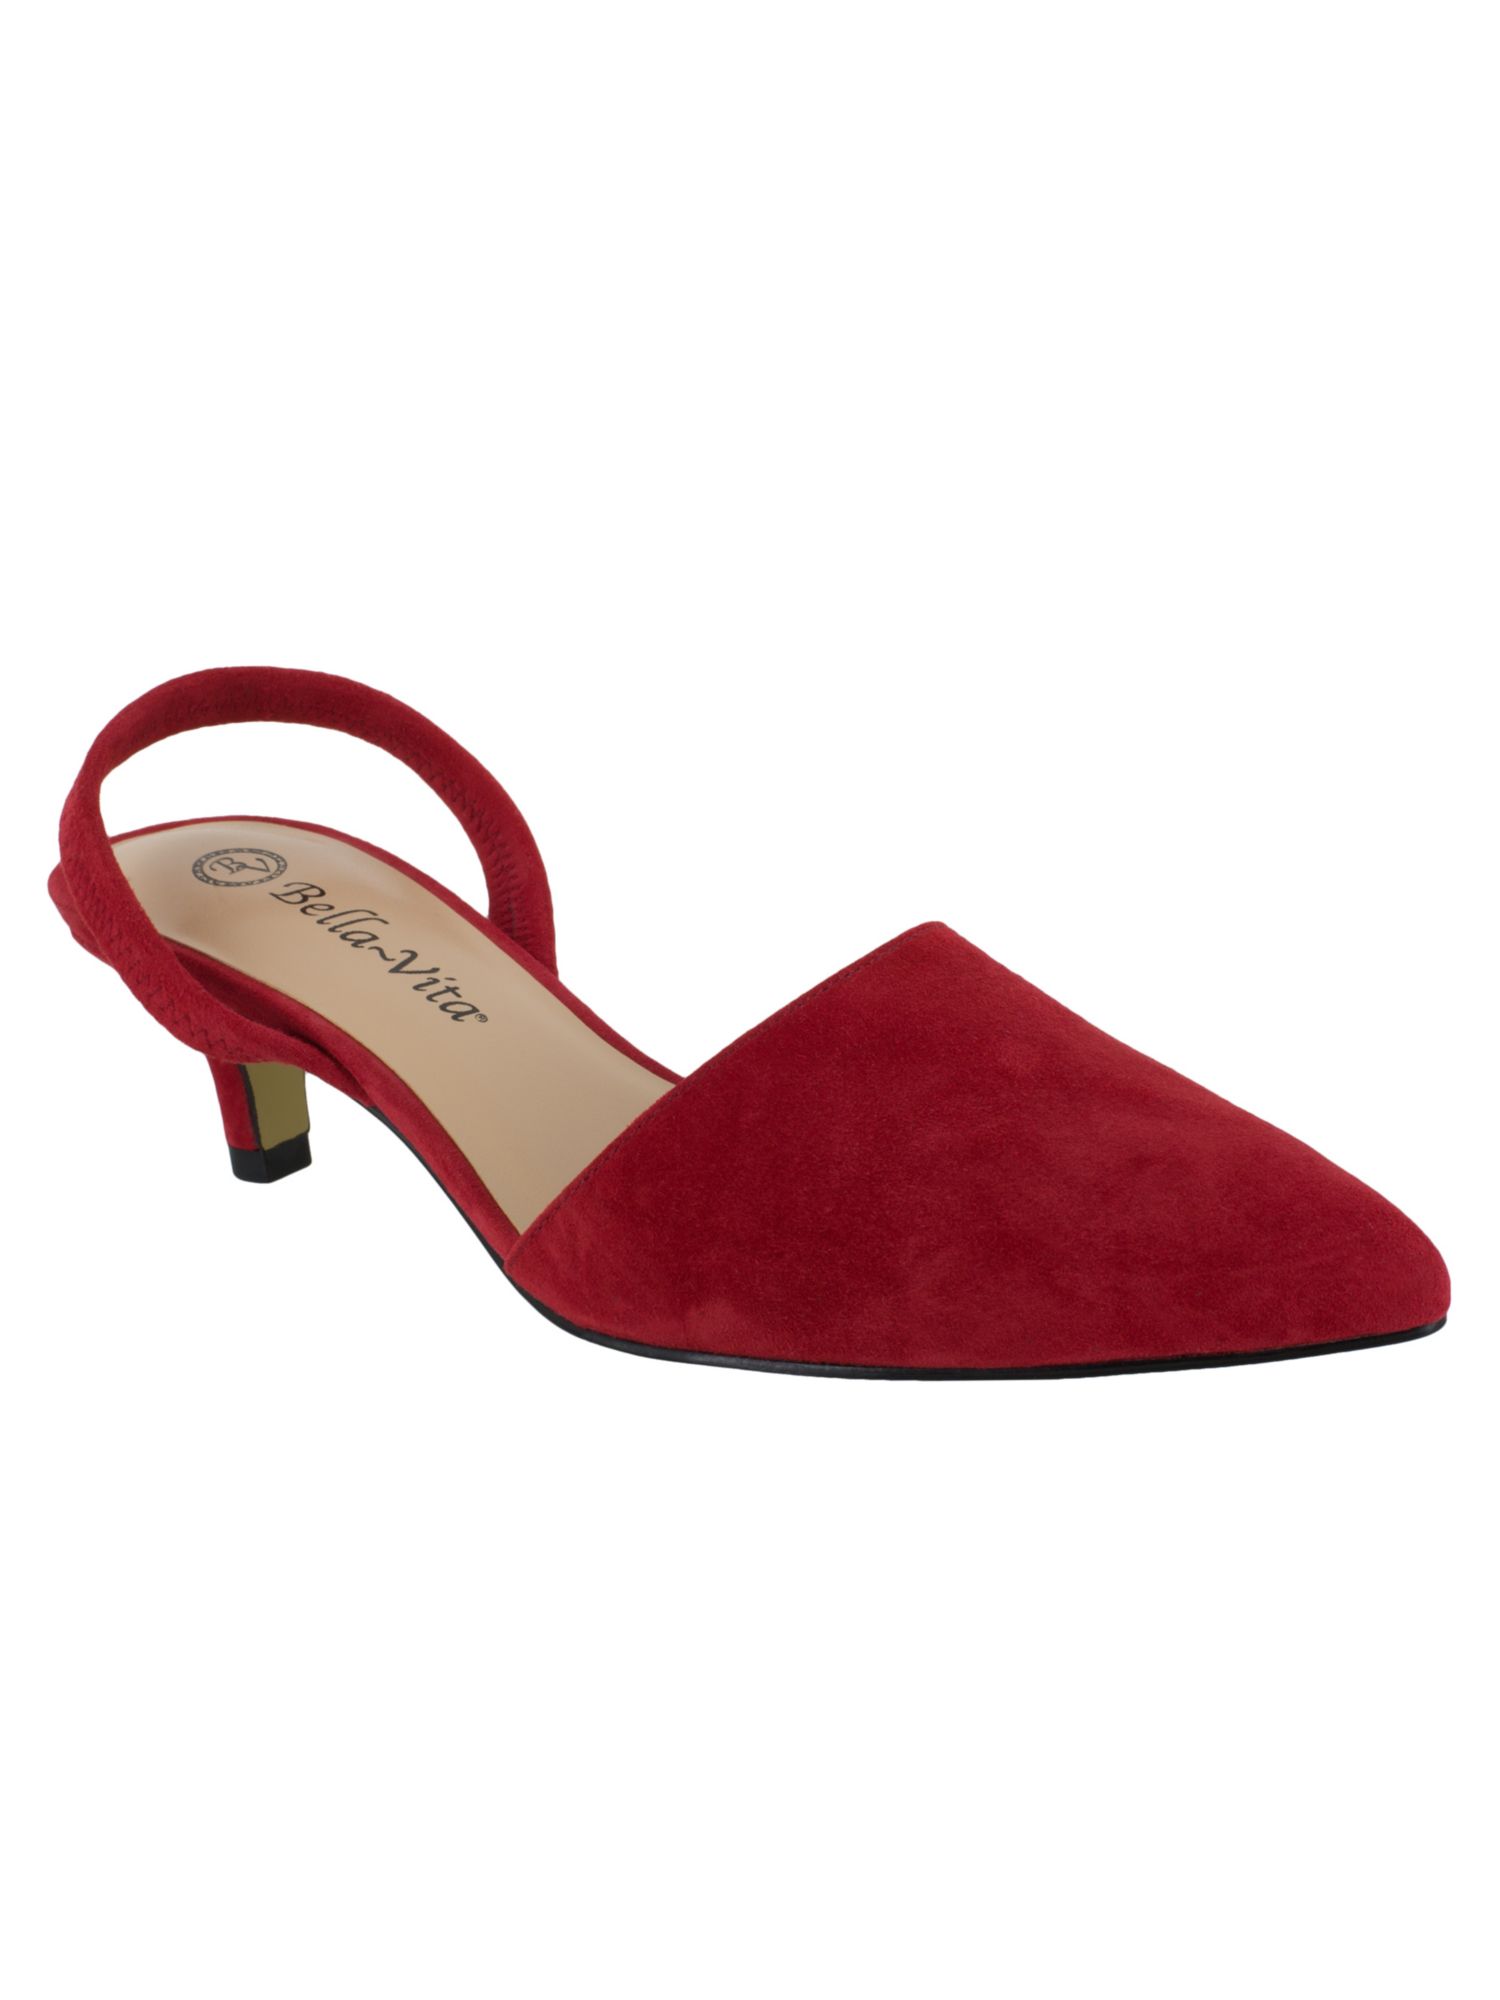 BELLA VITA Womens Red Padded Stretch Sarah Pointed Toe Kitten Heel Slip On Leather Slingback 9.5